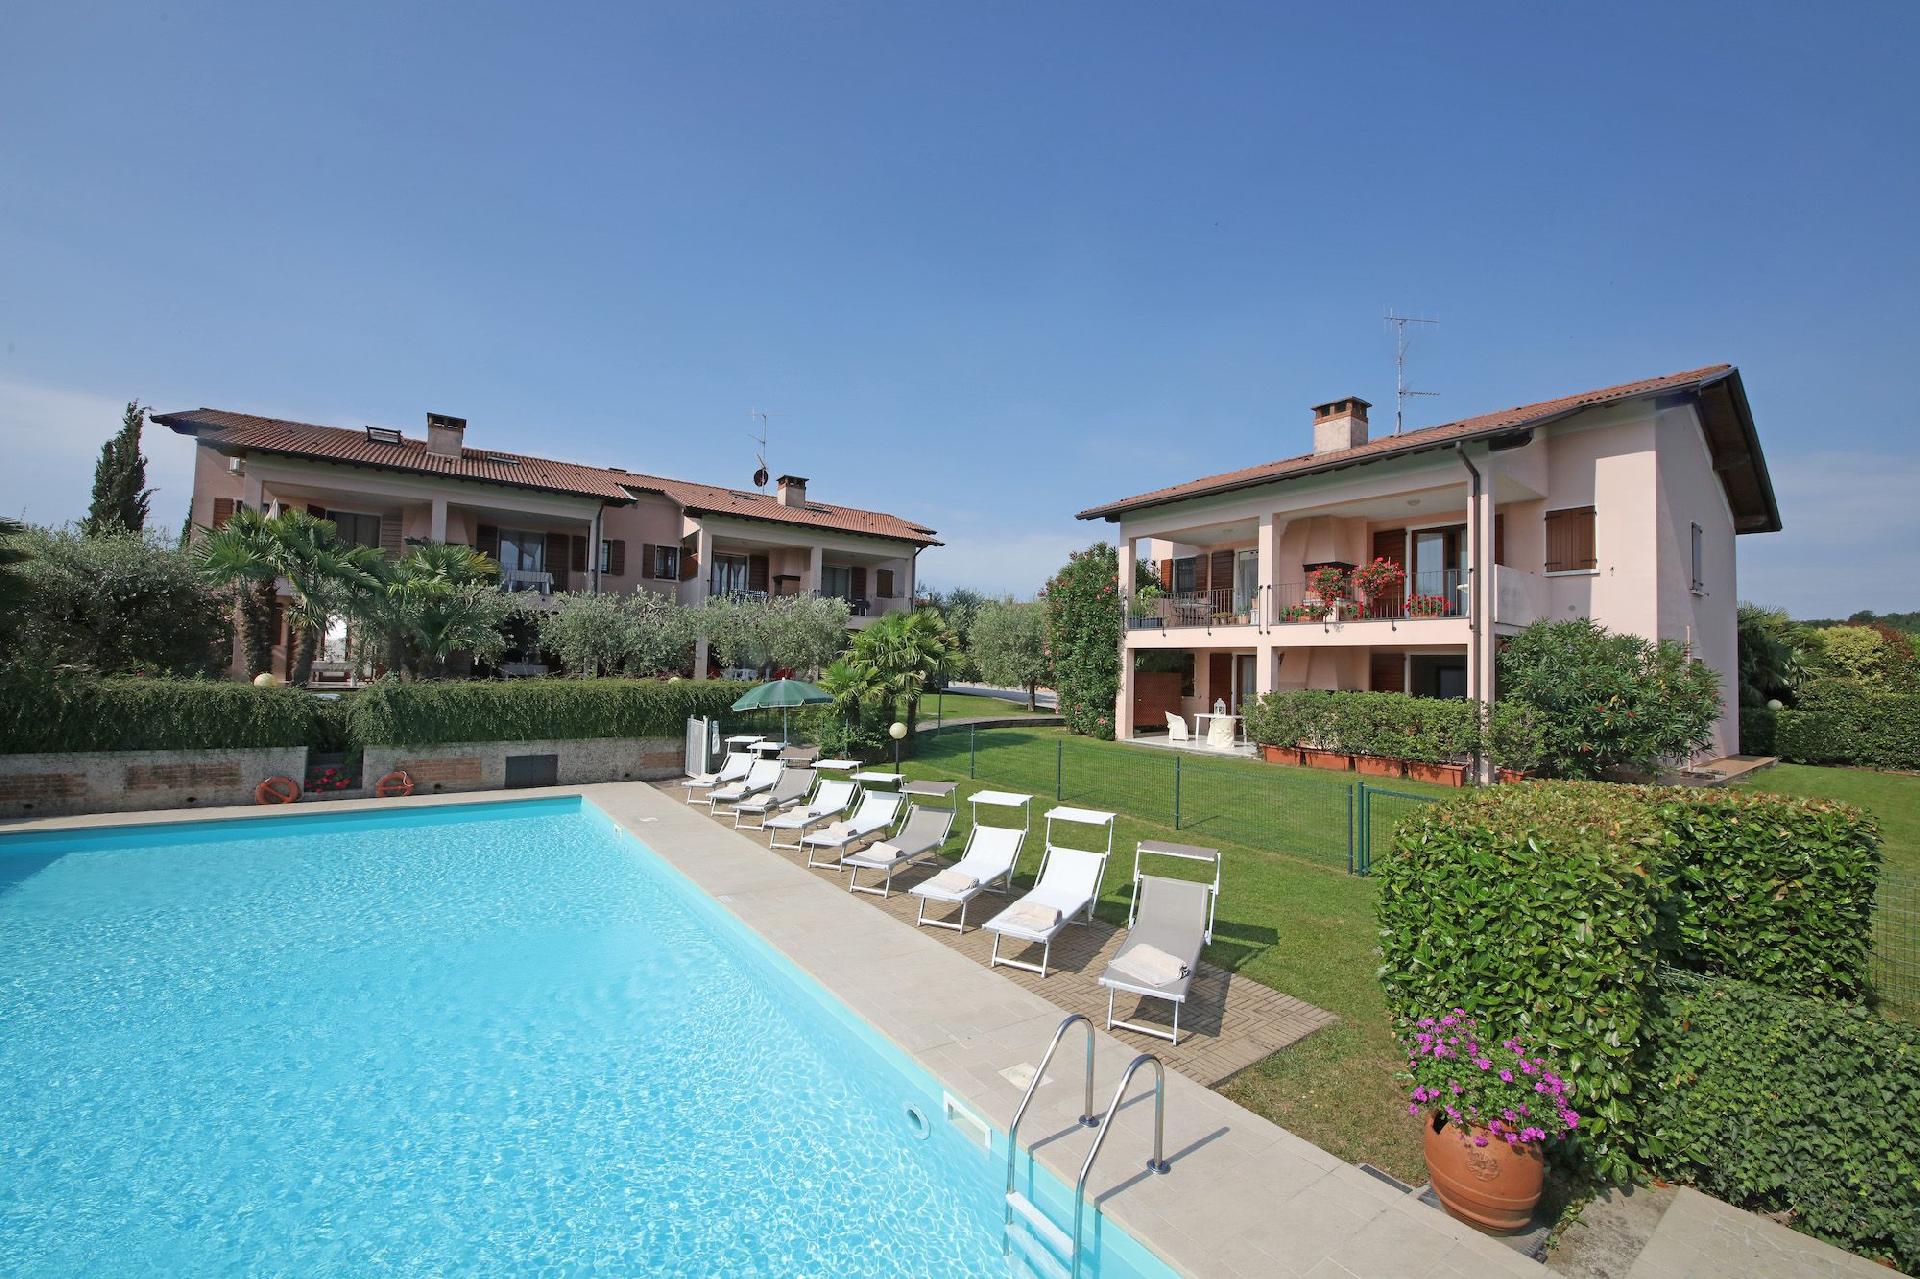 Appartement in Solarolo mit Grill, gemeinsamem Poo   Gardasee - Lago di Garda